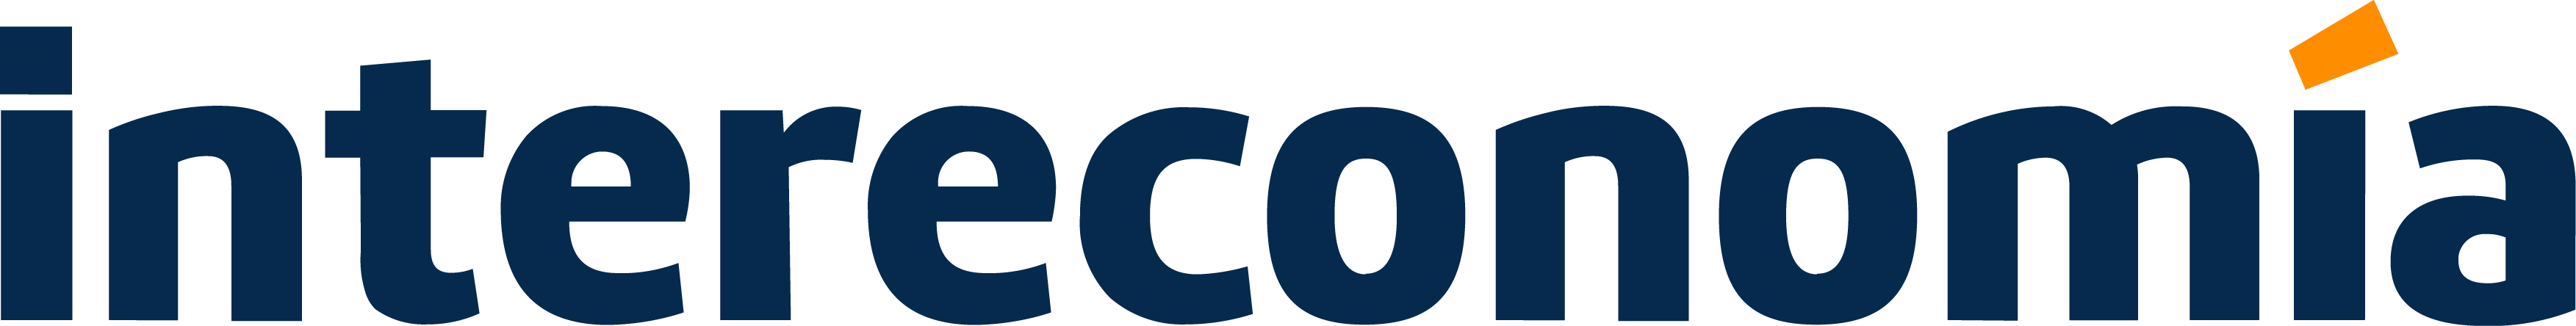 Logotipo-radio-intereconomia-premios-azul